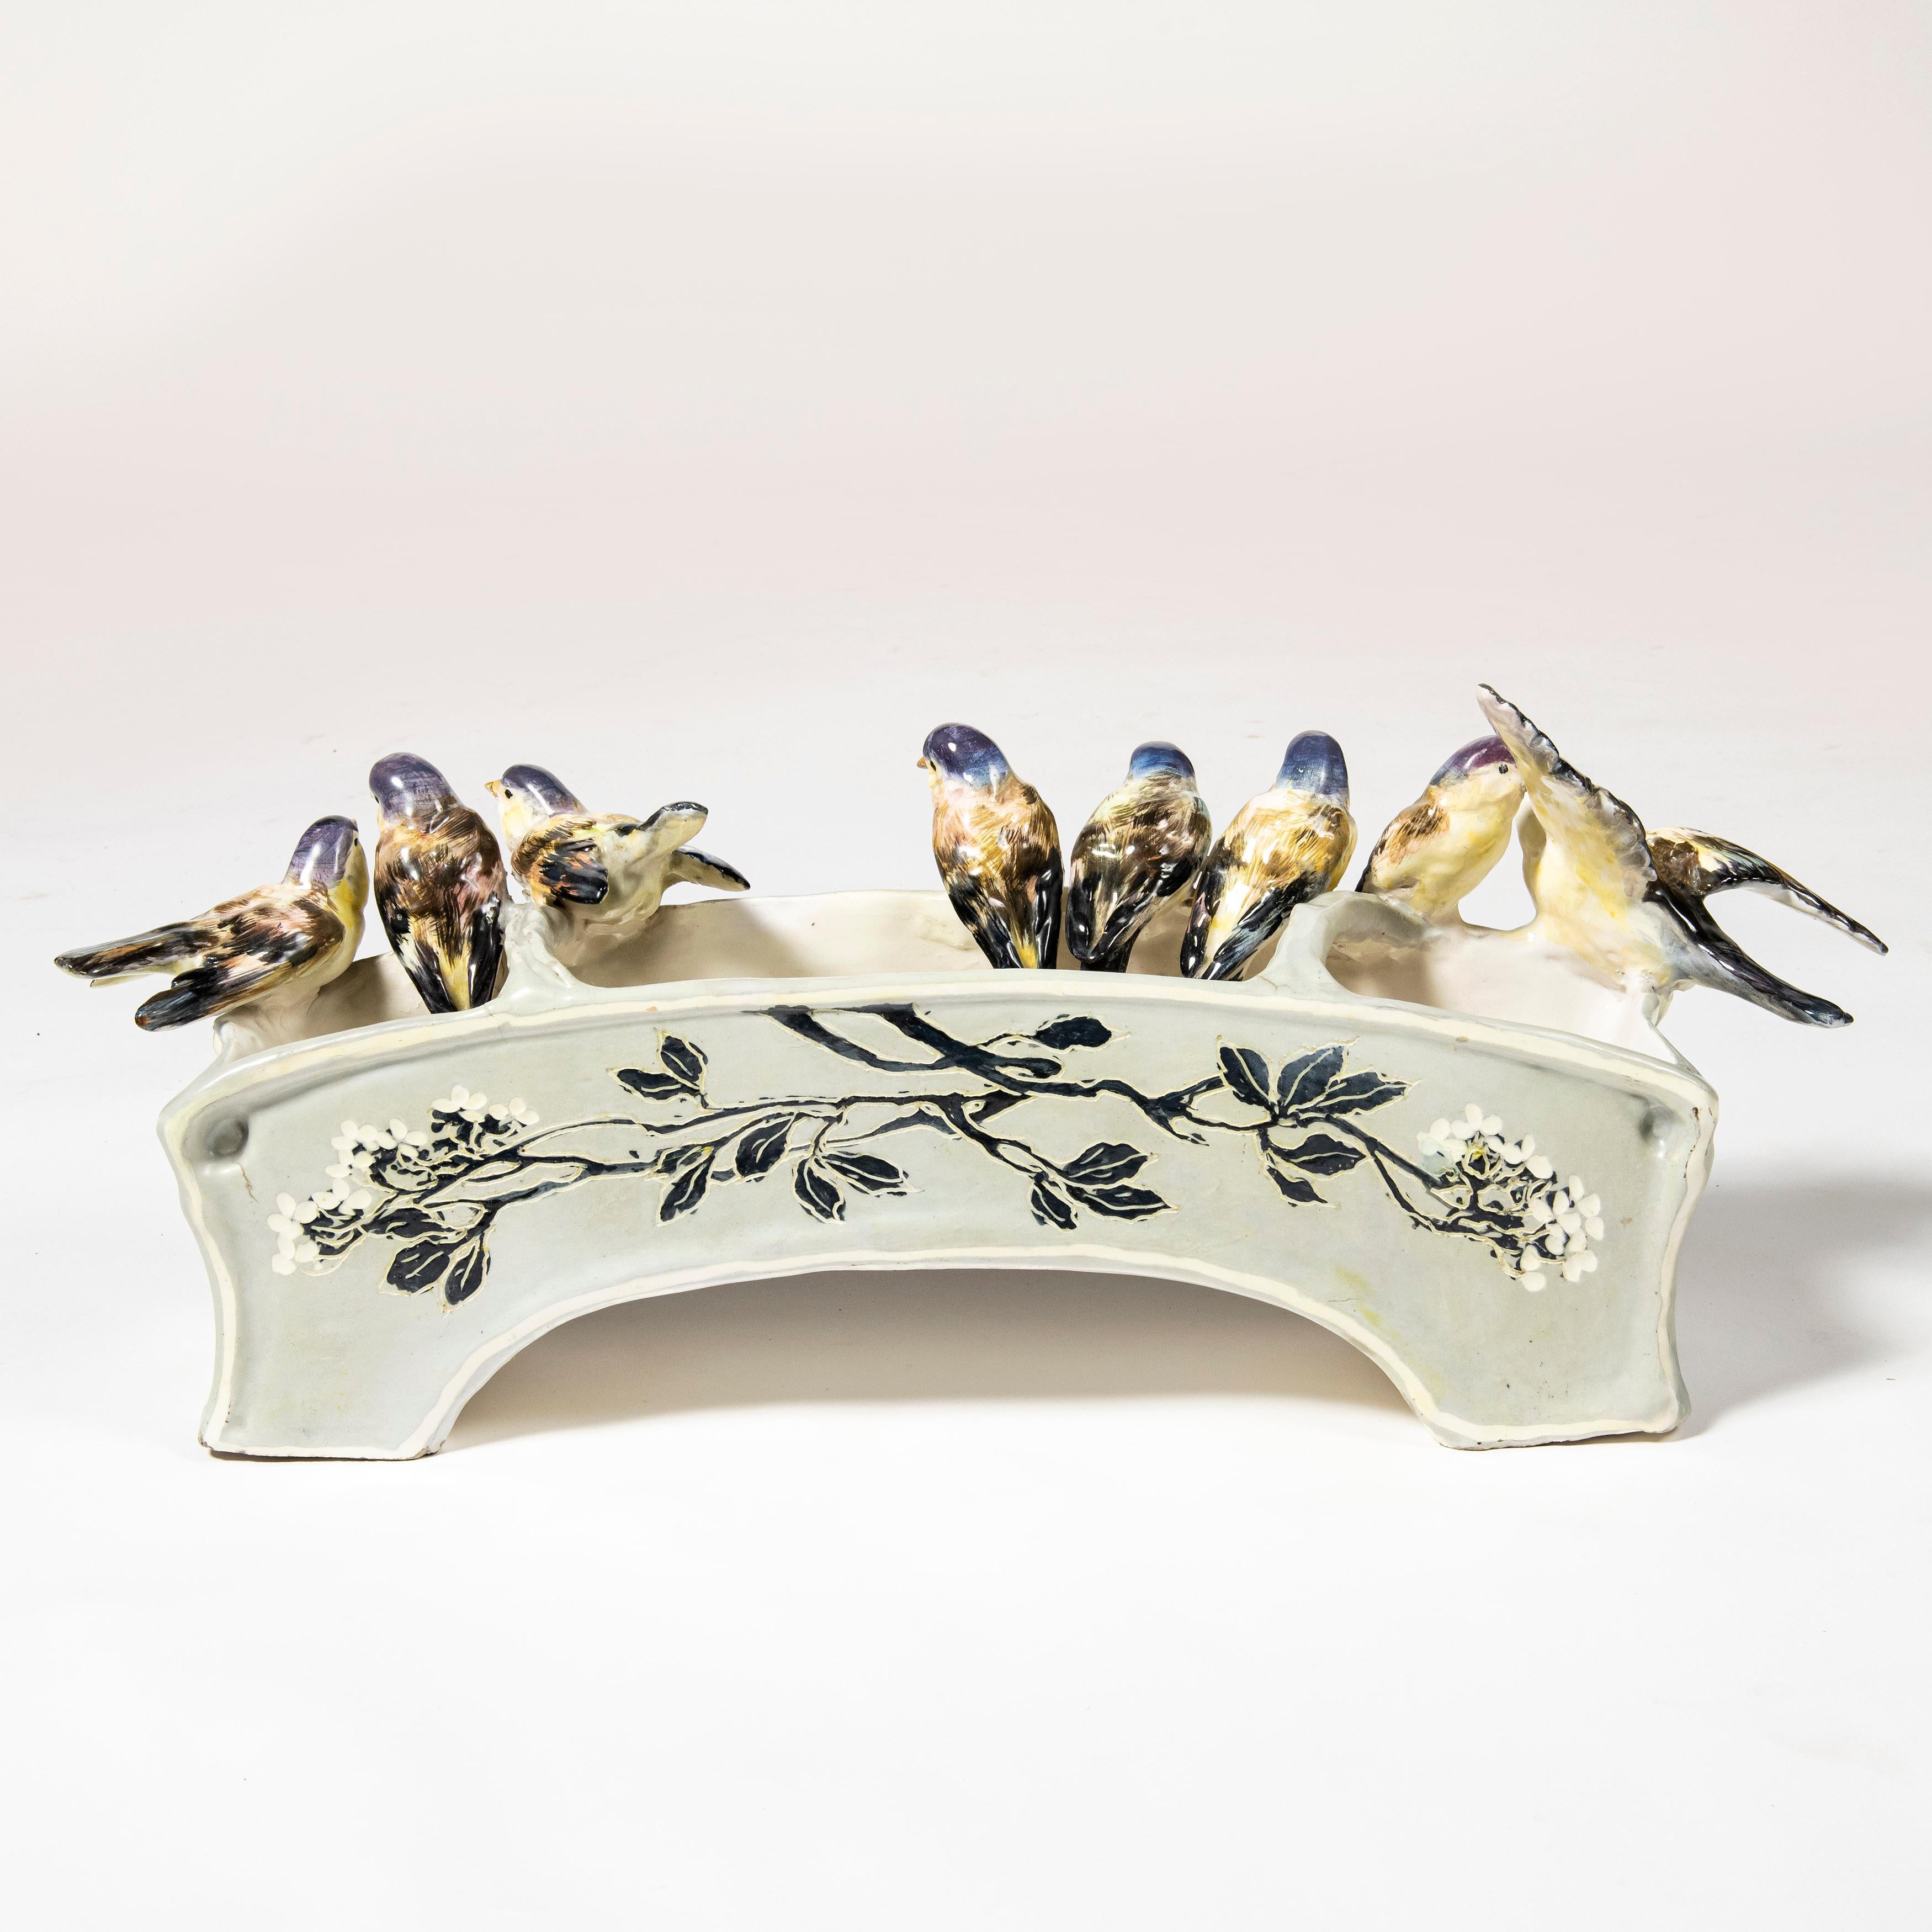 French Glazed Ceramic Jardiniere with Birds, France, Early 20th Century